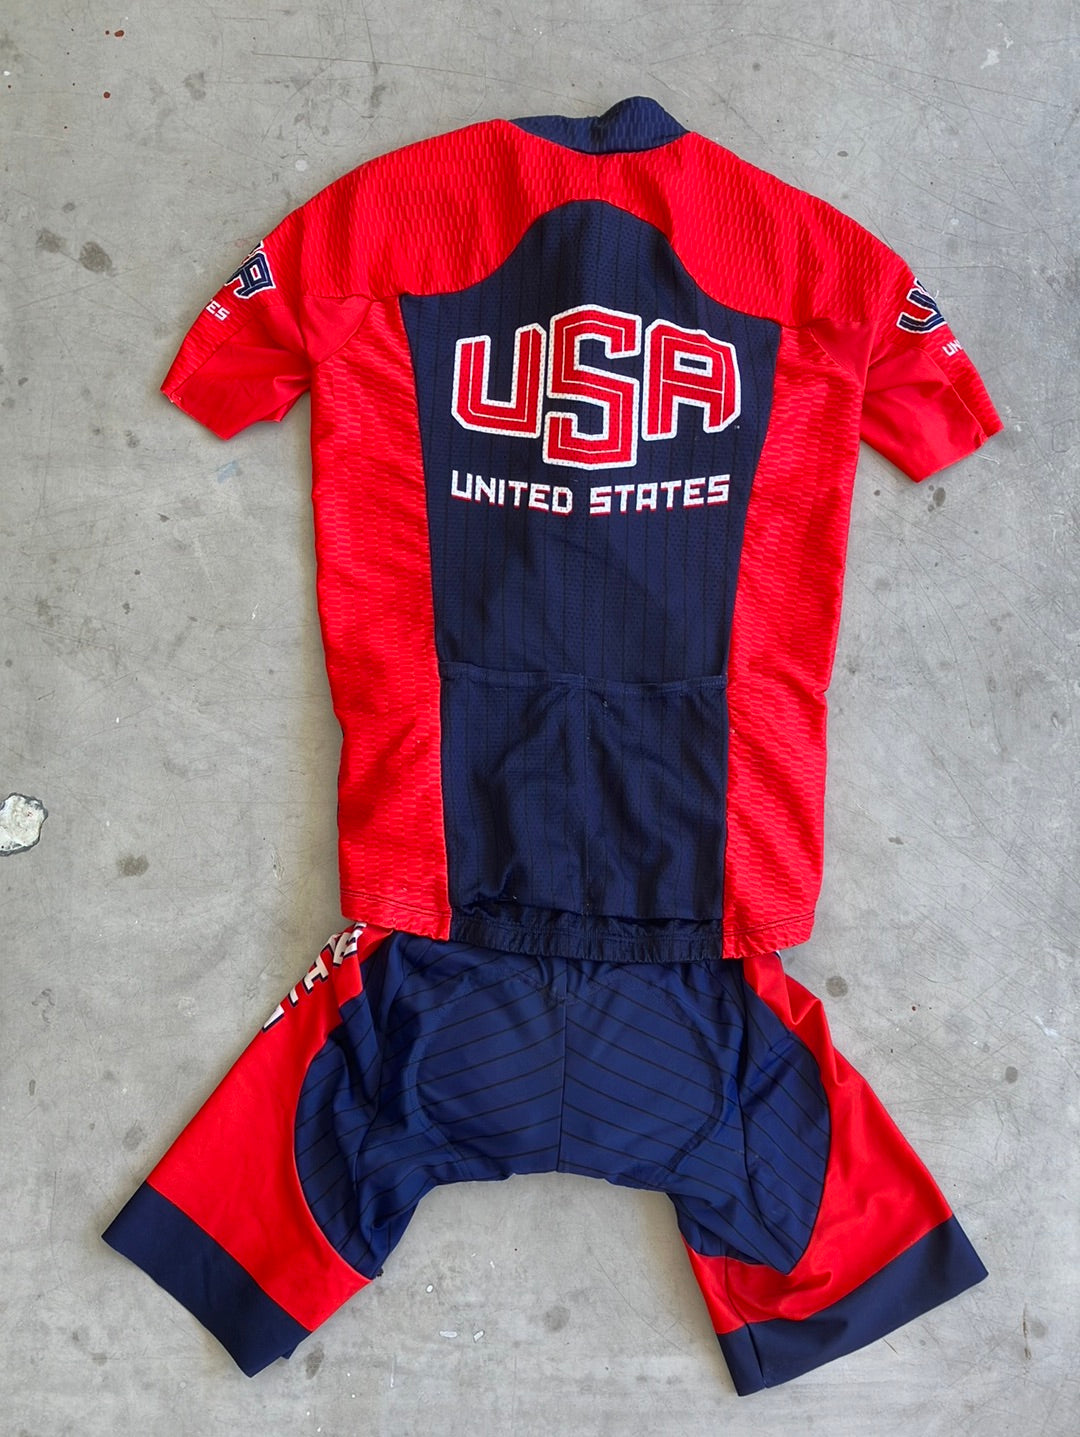 Cycling Kit Bundle - Aero Jersey & Bib Shorts | Cuore | USA Men National Team | Pro-Issued Cycling Kit